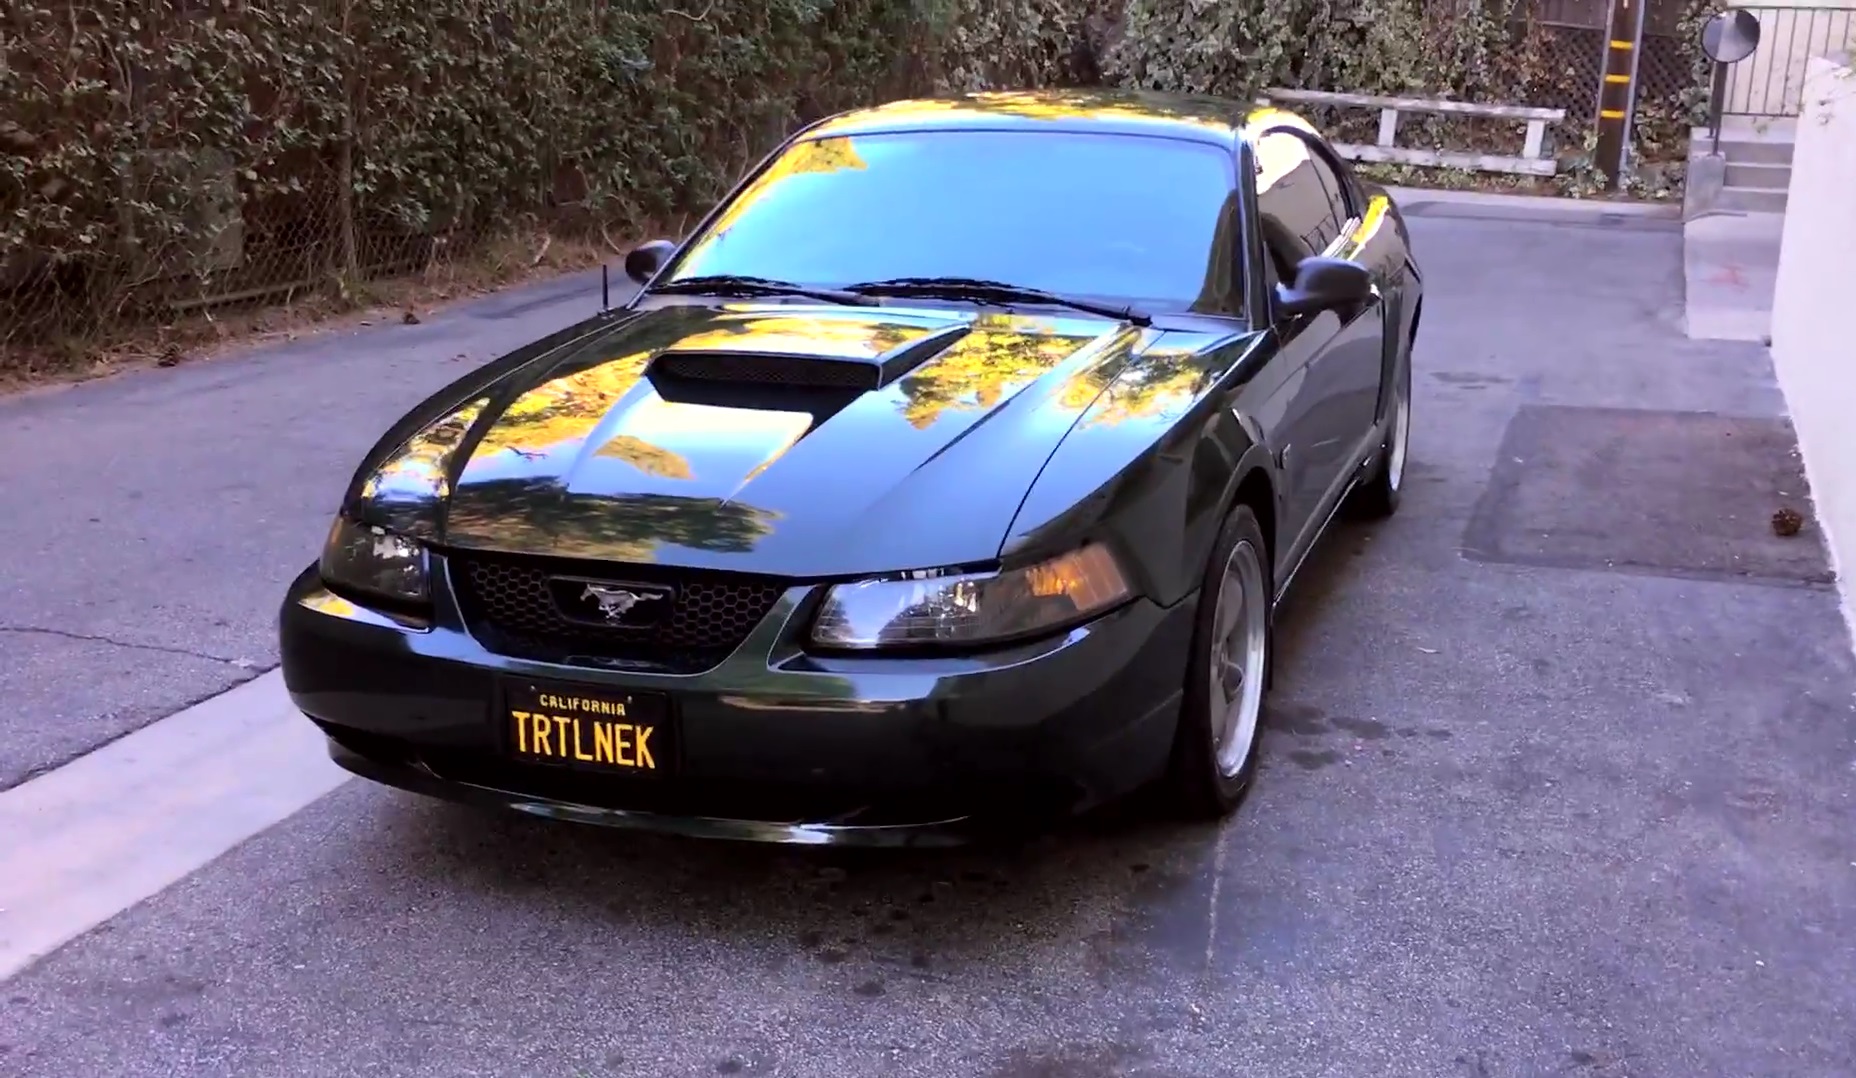 Video: 2001 Ford Mustang Bullitt Walkaround + Test Drive